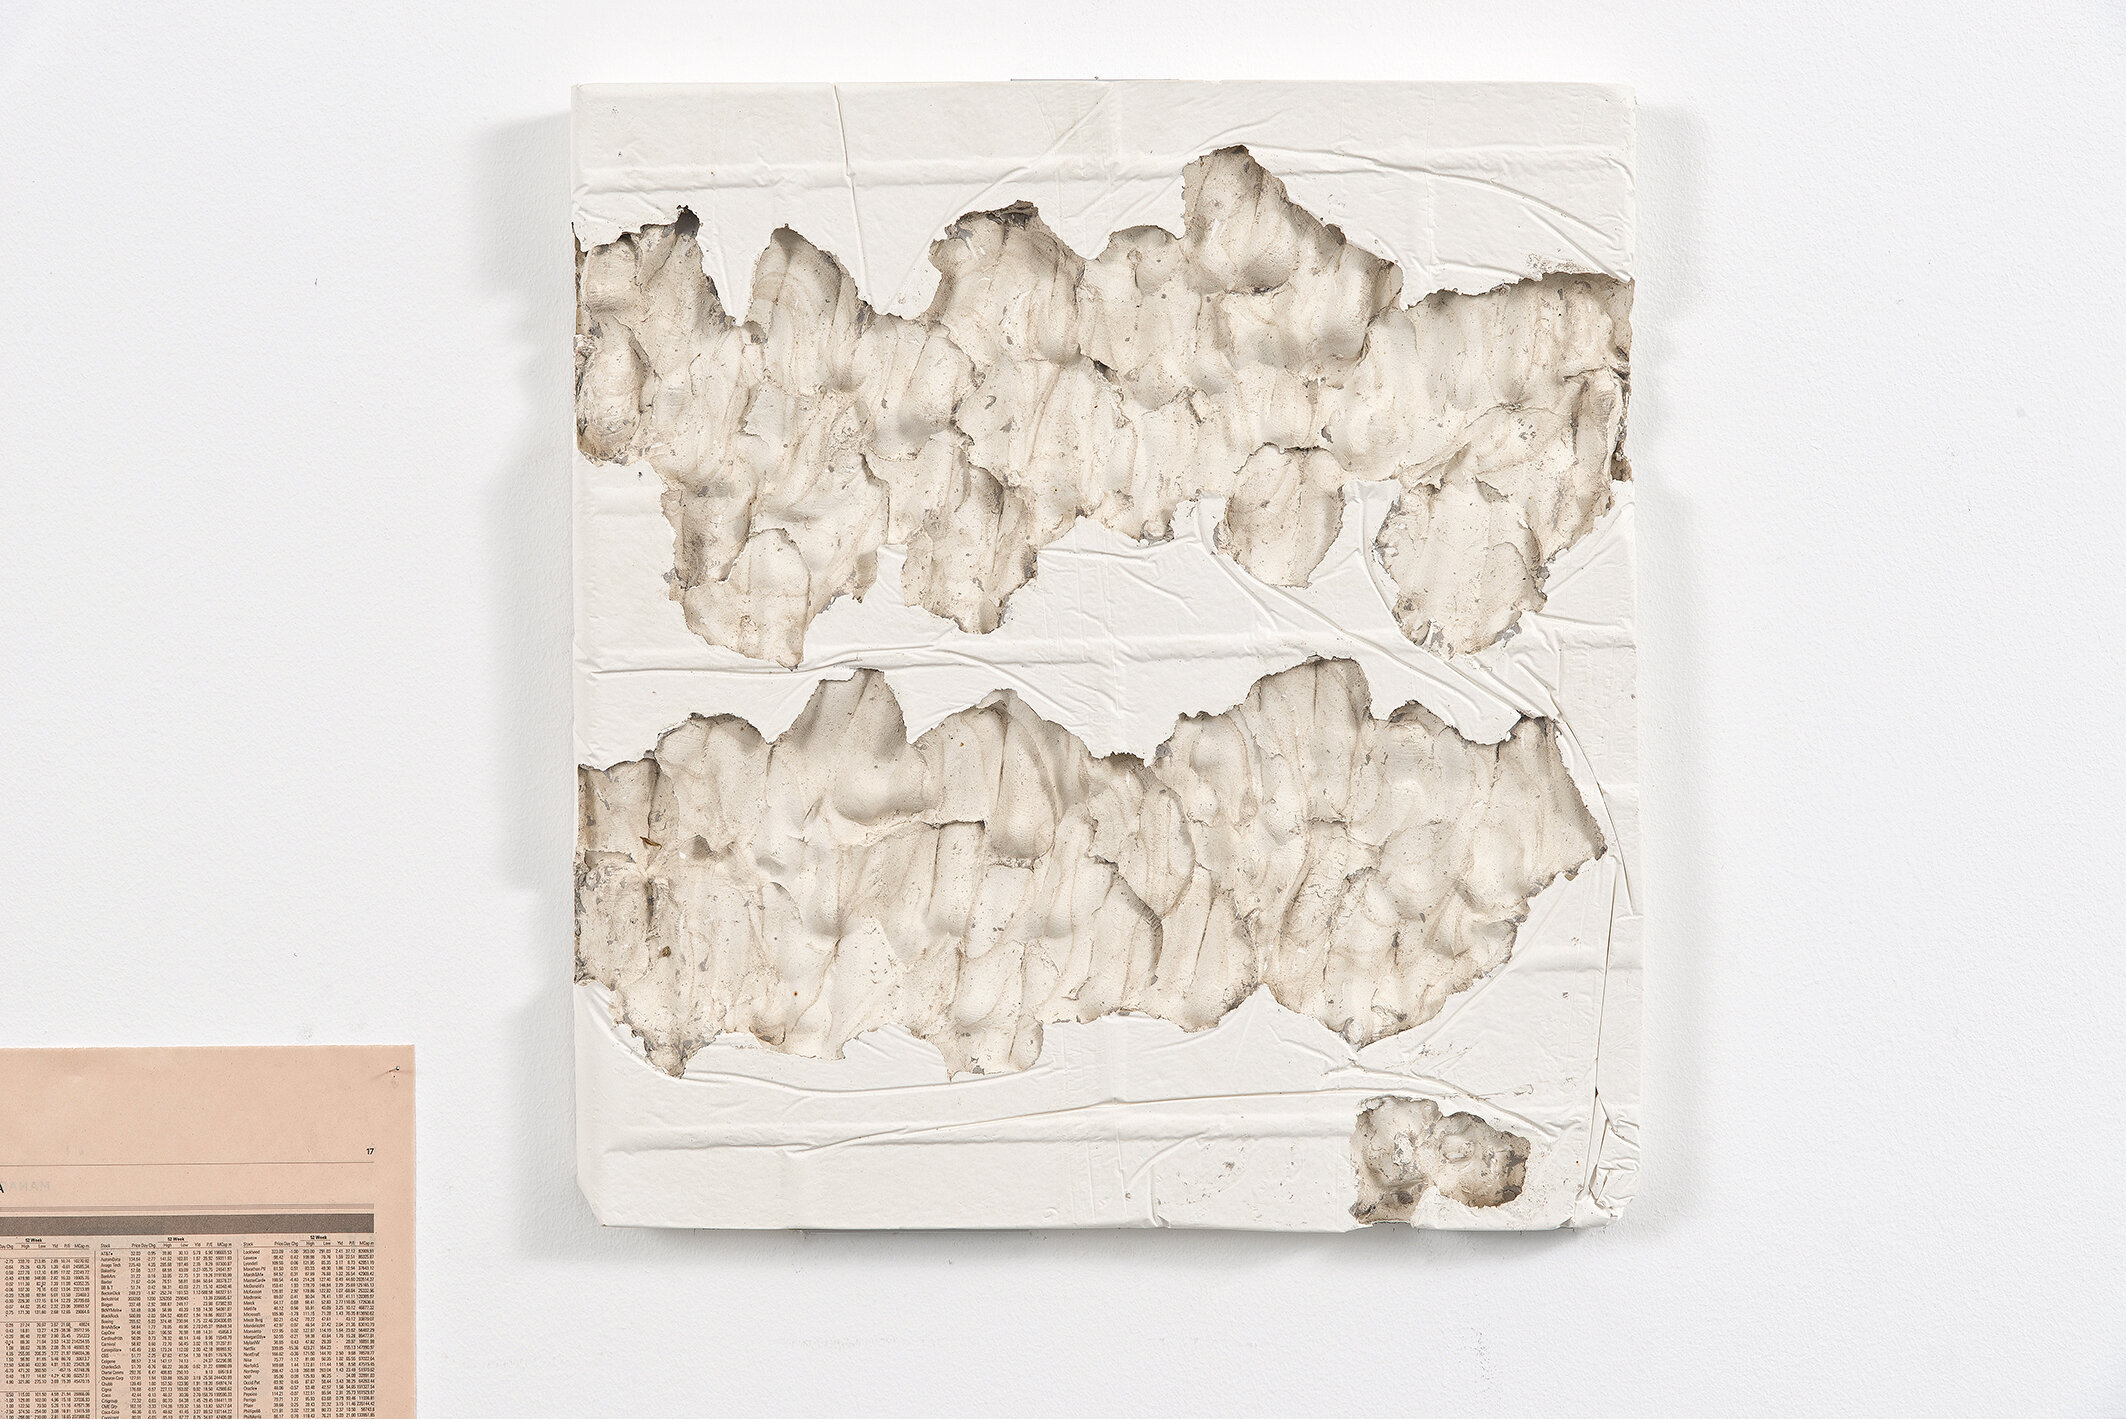   Gypse Riverbed (de orilla a orilla) , plaster, unfired clay, 38cm x 40cm x 4cm, 68projects, Berlin, Germany, 2018 